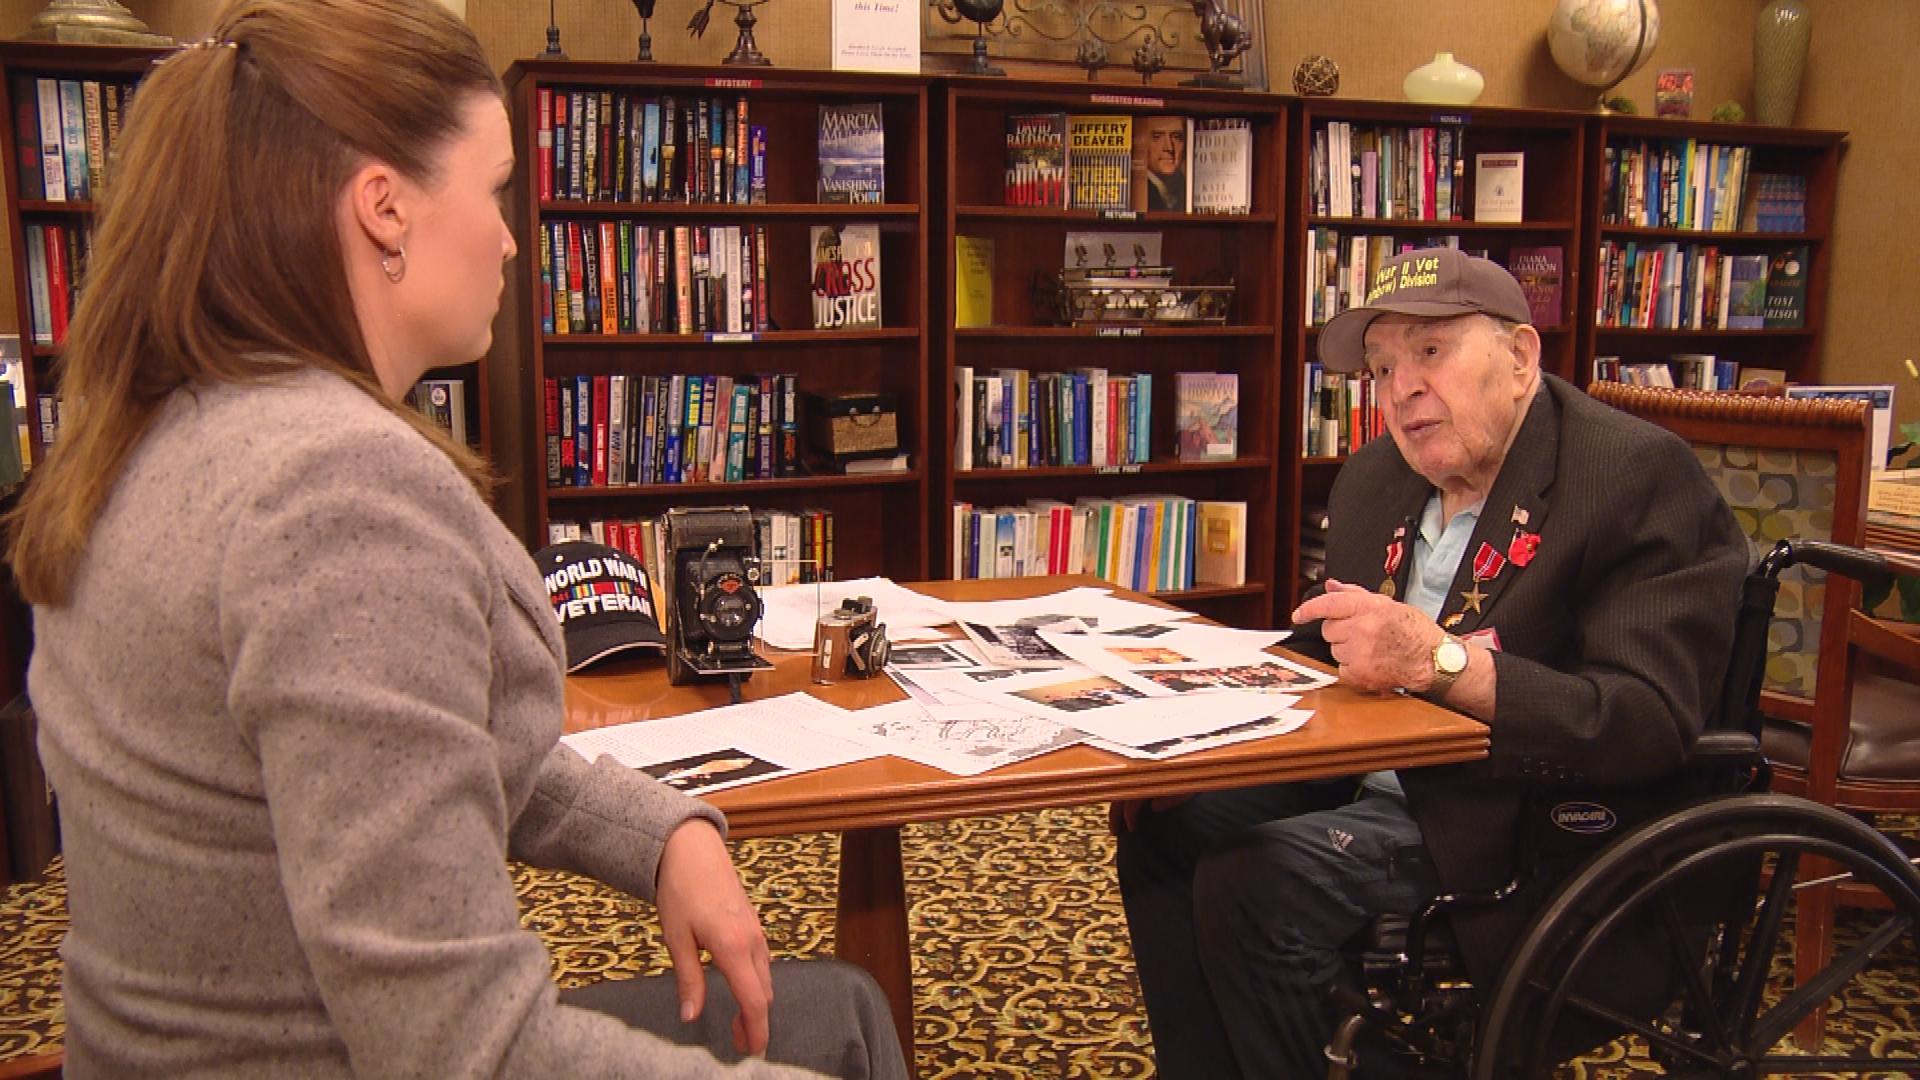 CBS4's Melissa Garcia interviews Sid Shafner (credit: CBS)